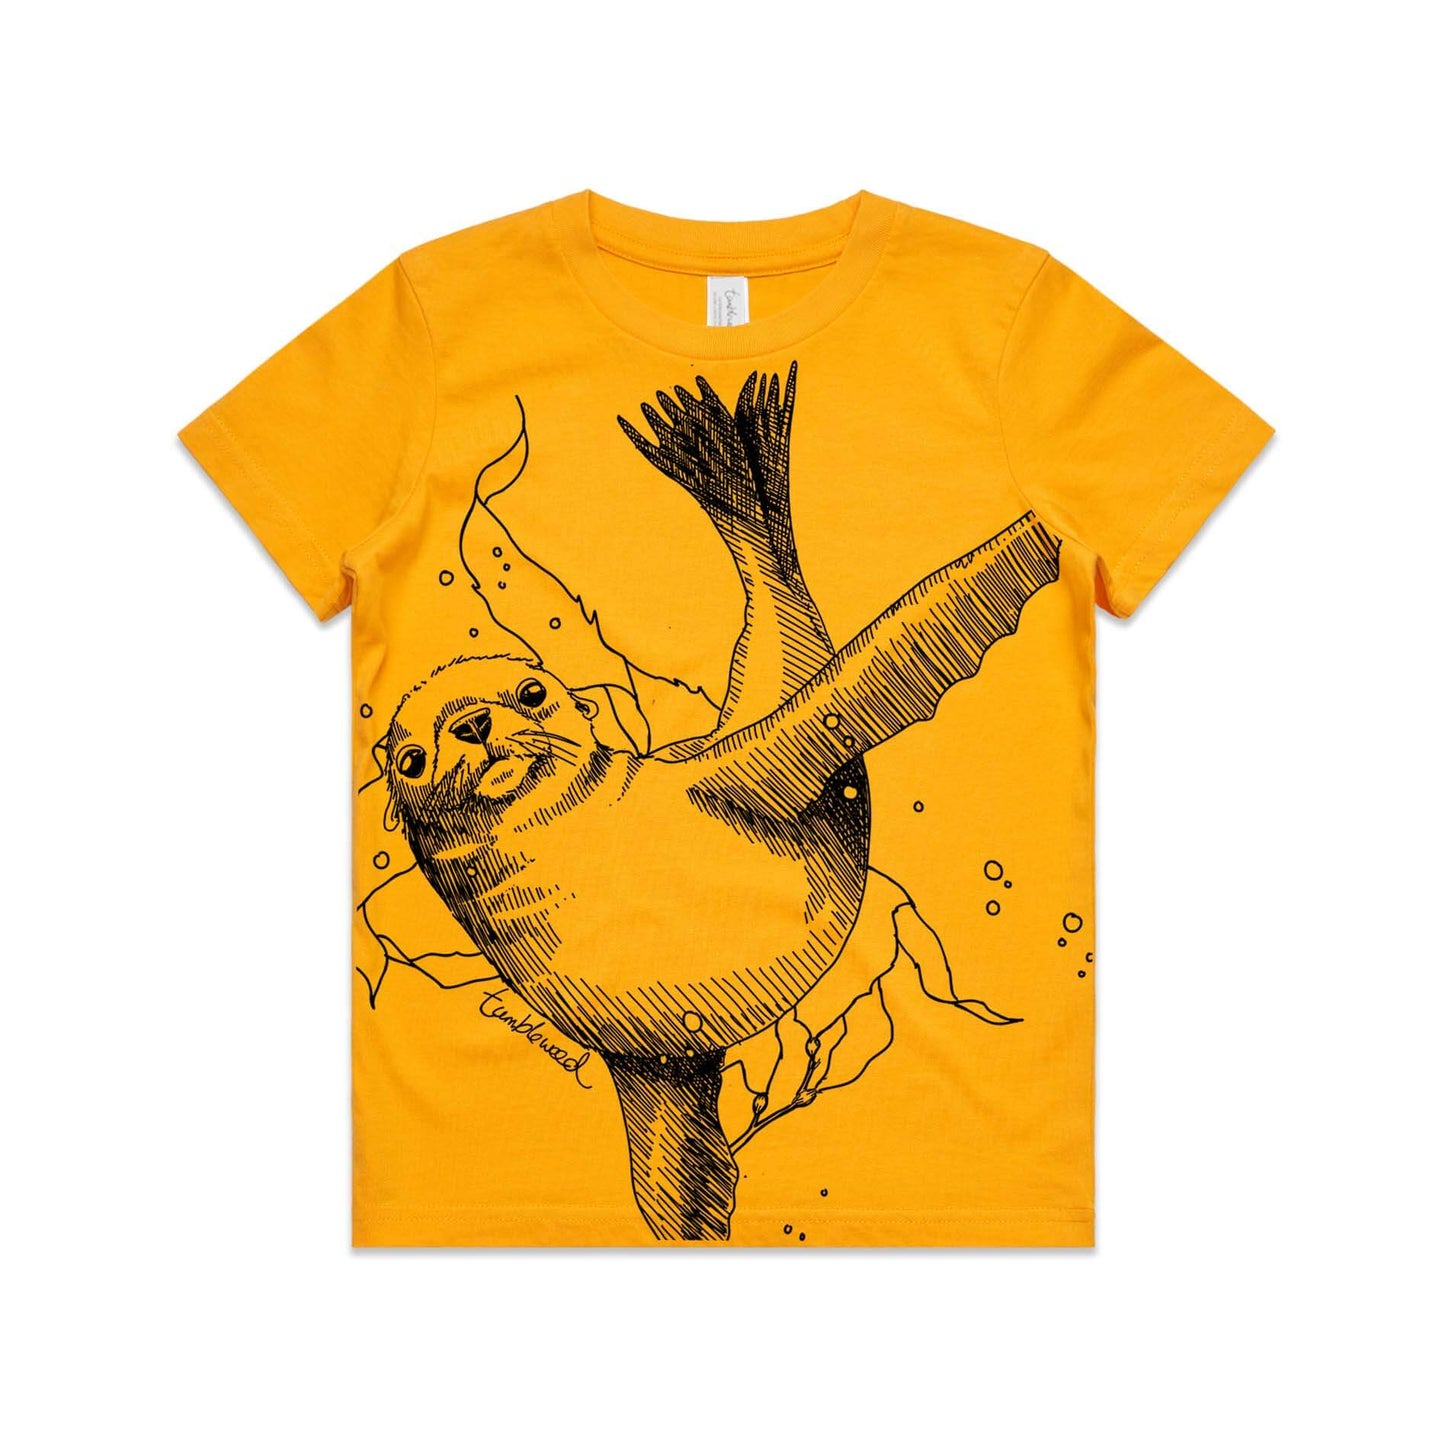 Gold, kids’ t-shirt featuring a screen printed New Zealand sea lion design.